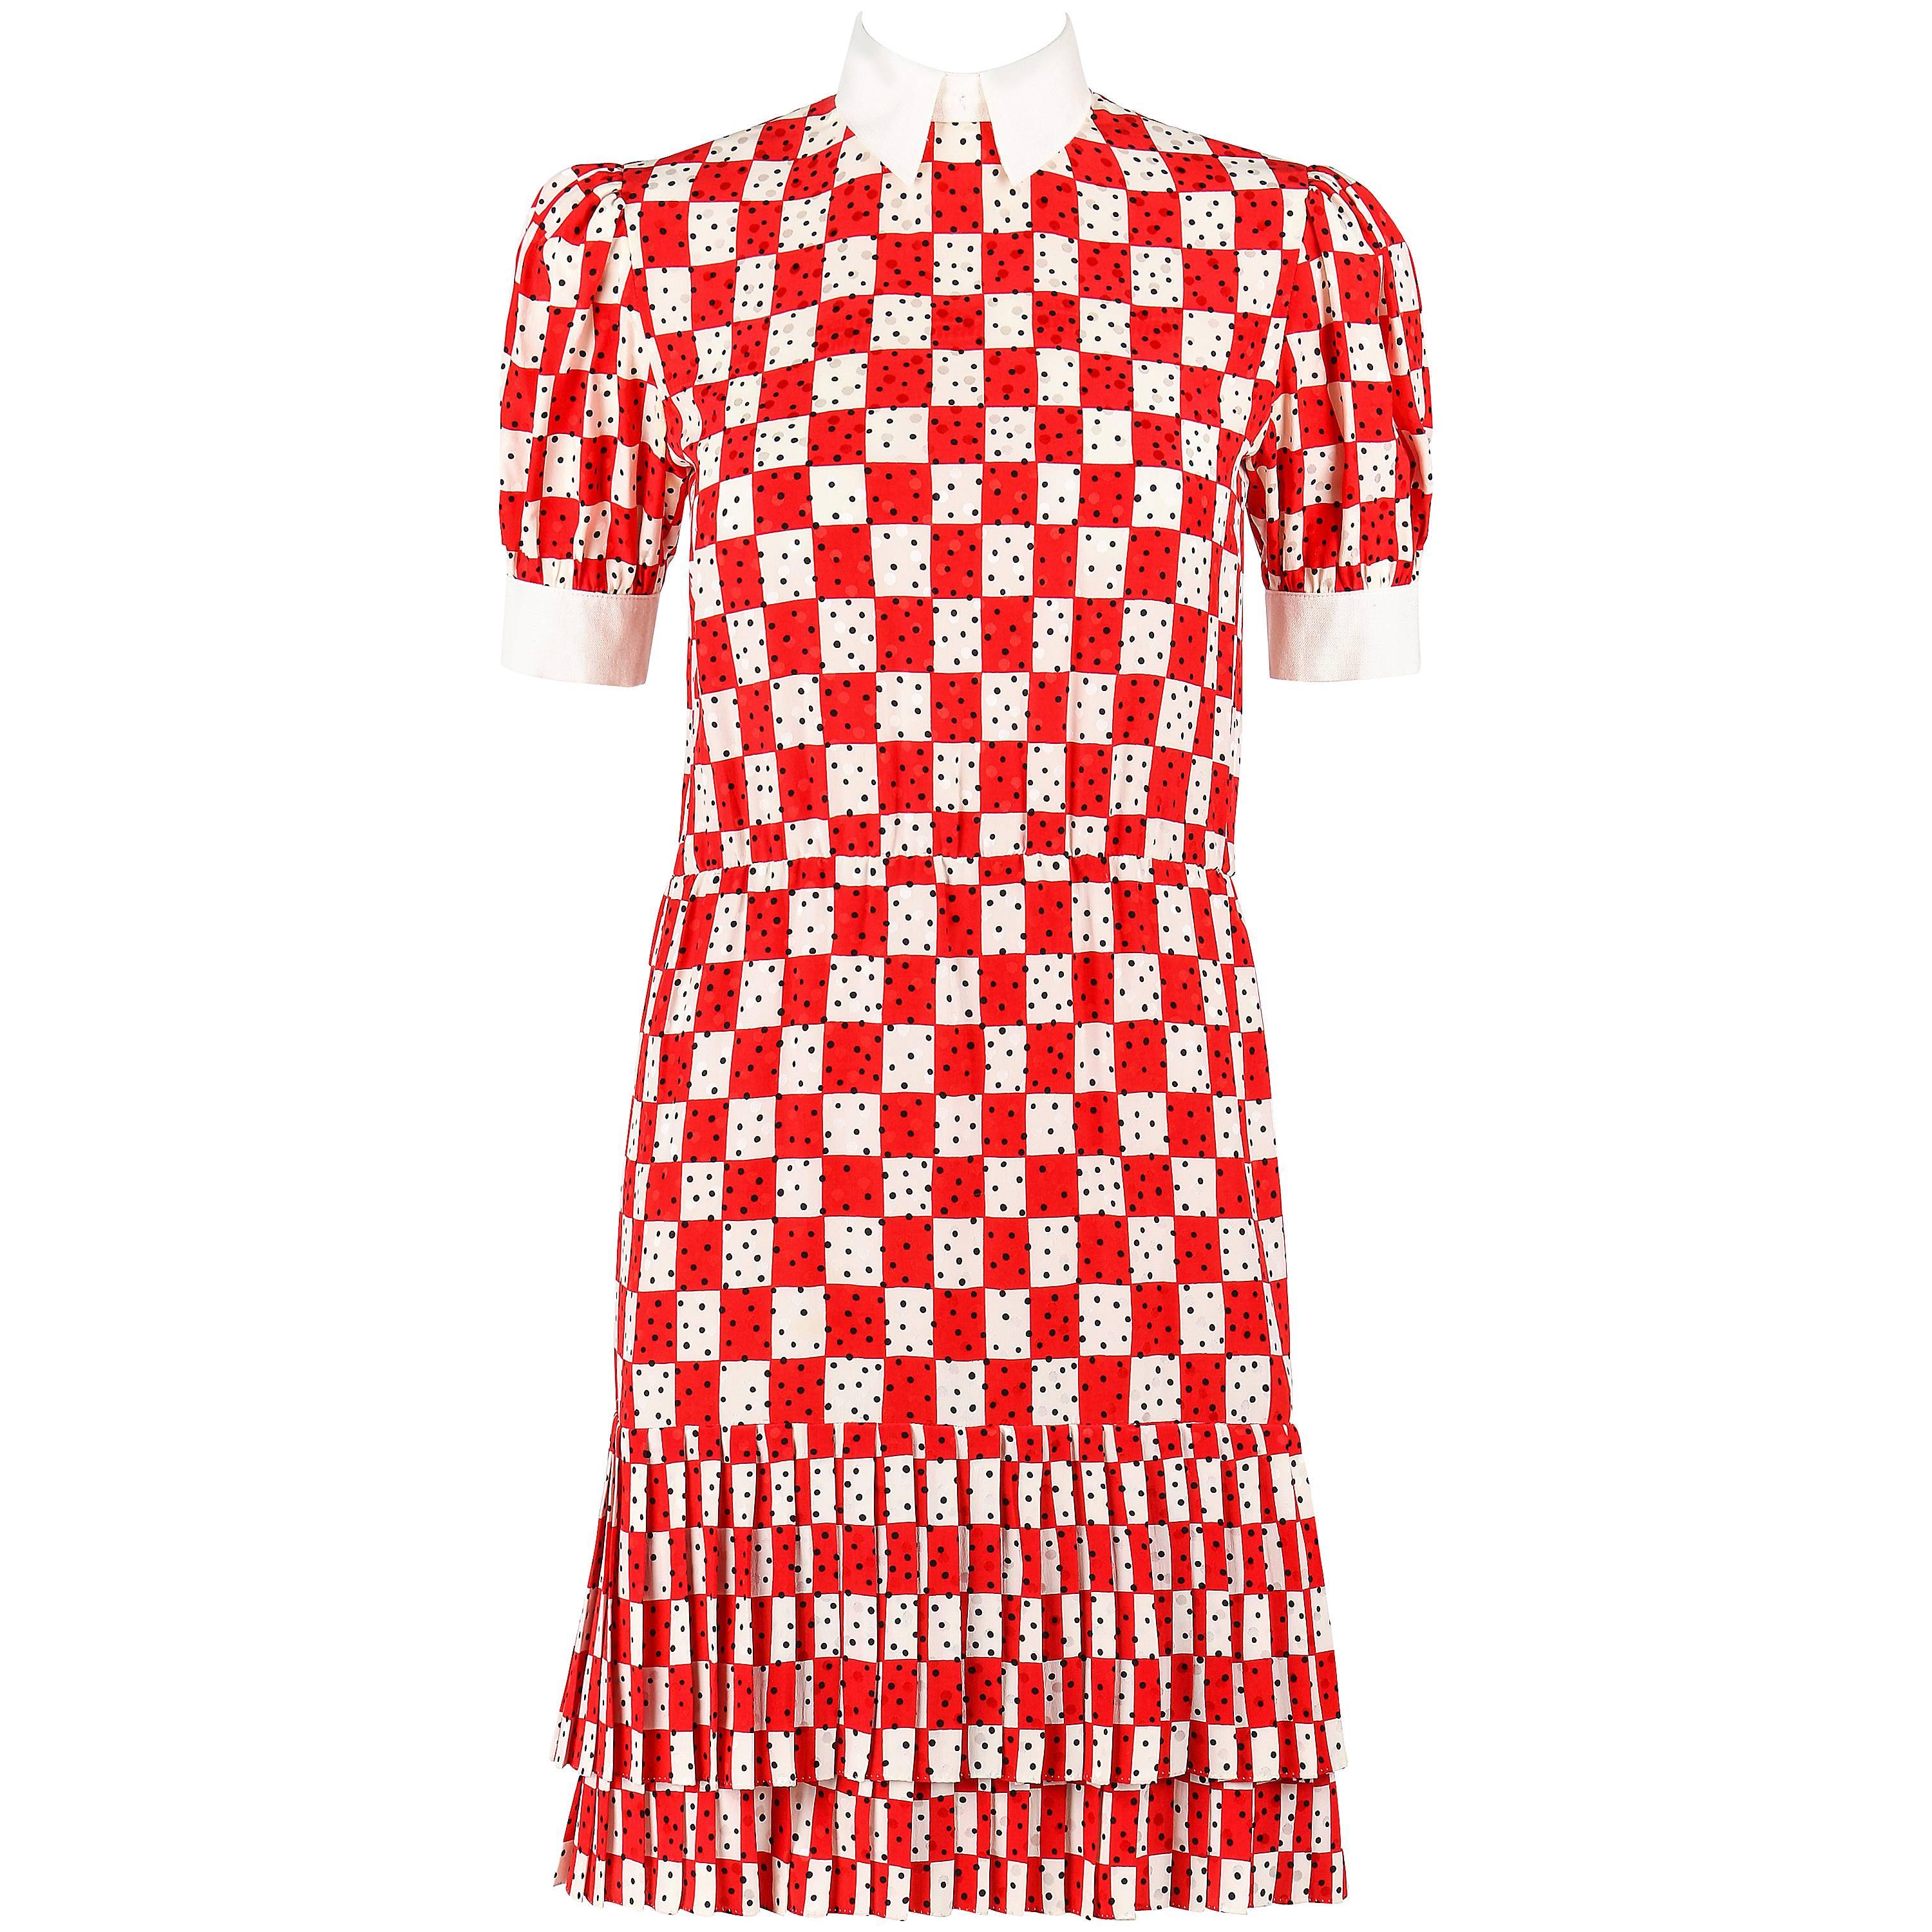 BILL BLASS c.1980's Red White Checkboard Polka Dot Print Silk Shirtwaist Dress